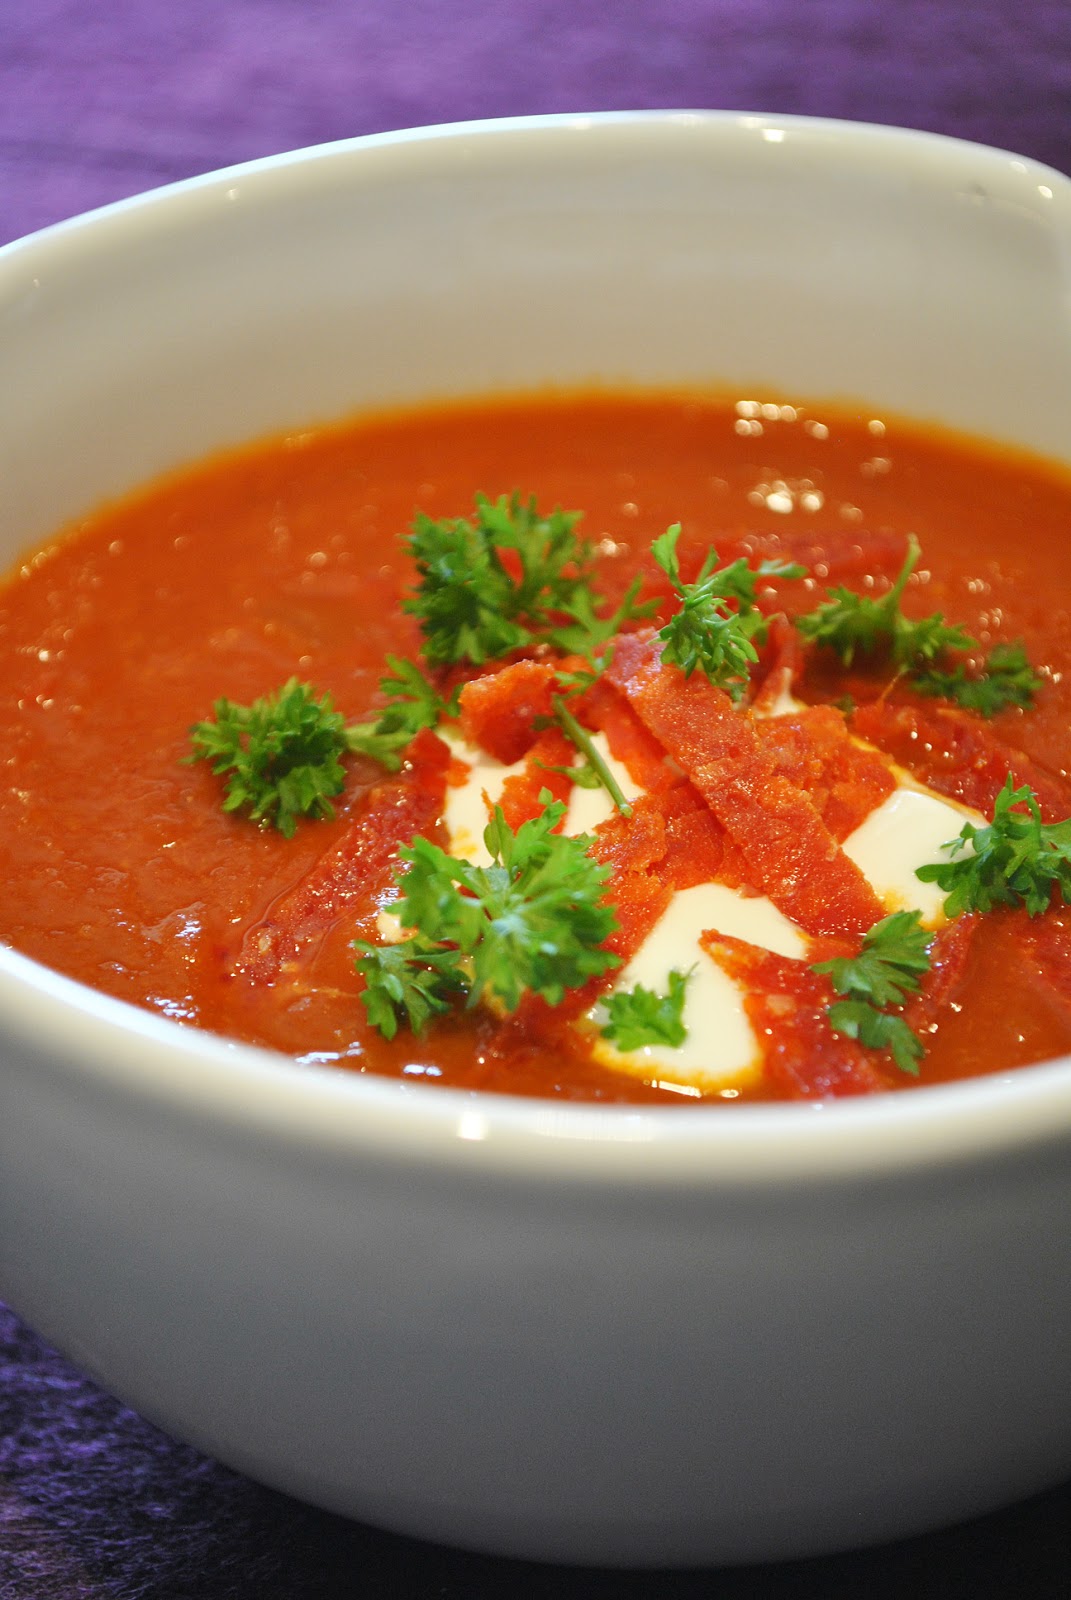 Tomaten Paprika Suppe Mit Champions — Rezepte Suchen